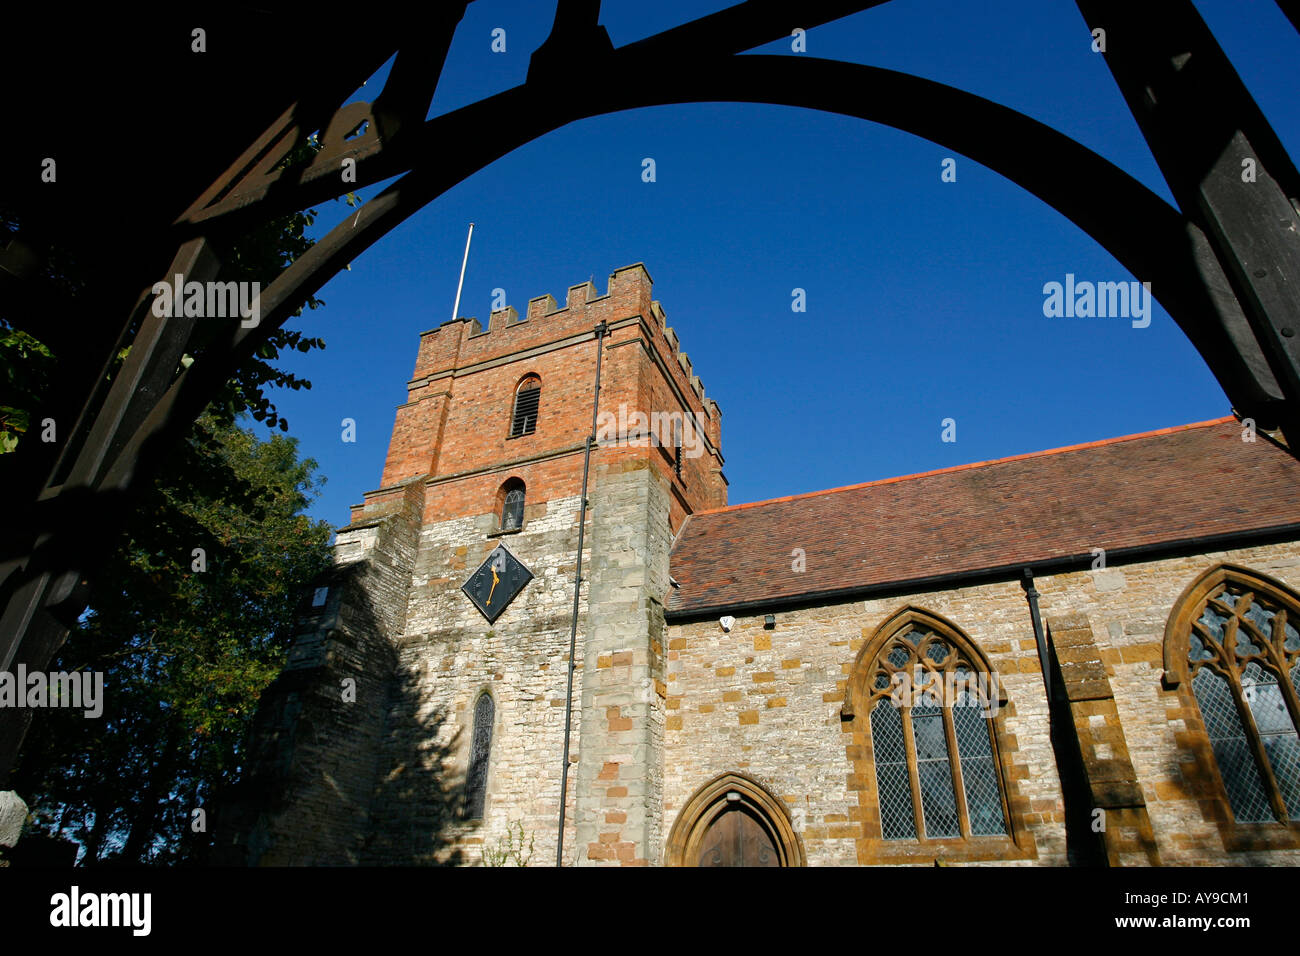 All Saints Church Harbury Leamington Spa Warwickshire England UK Stock Photo